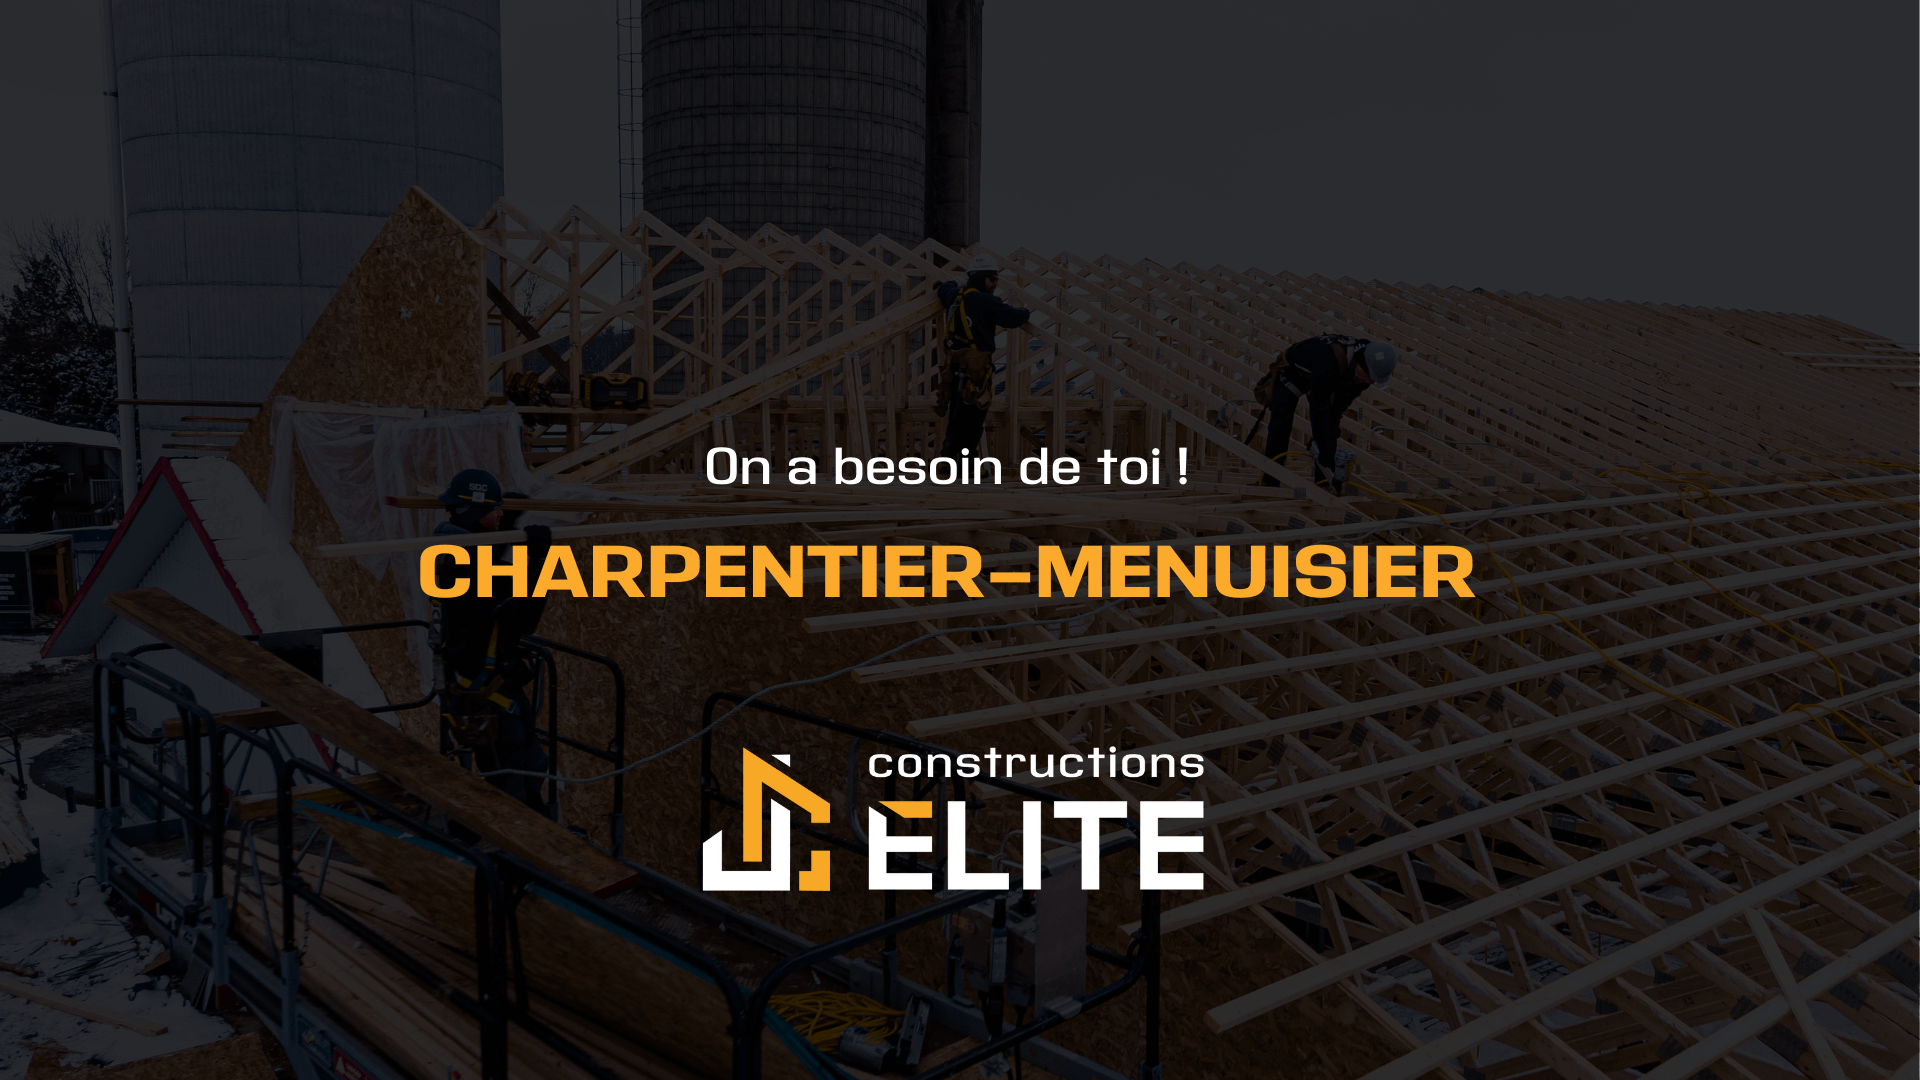 Emploi Charpentier-menuisier Construction JC Elite